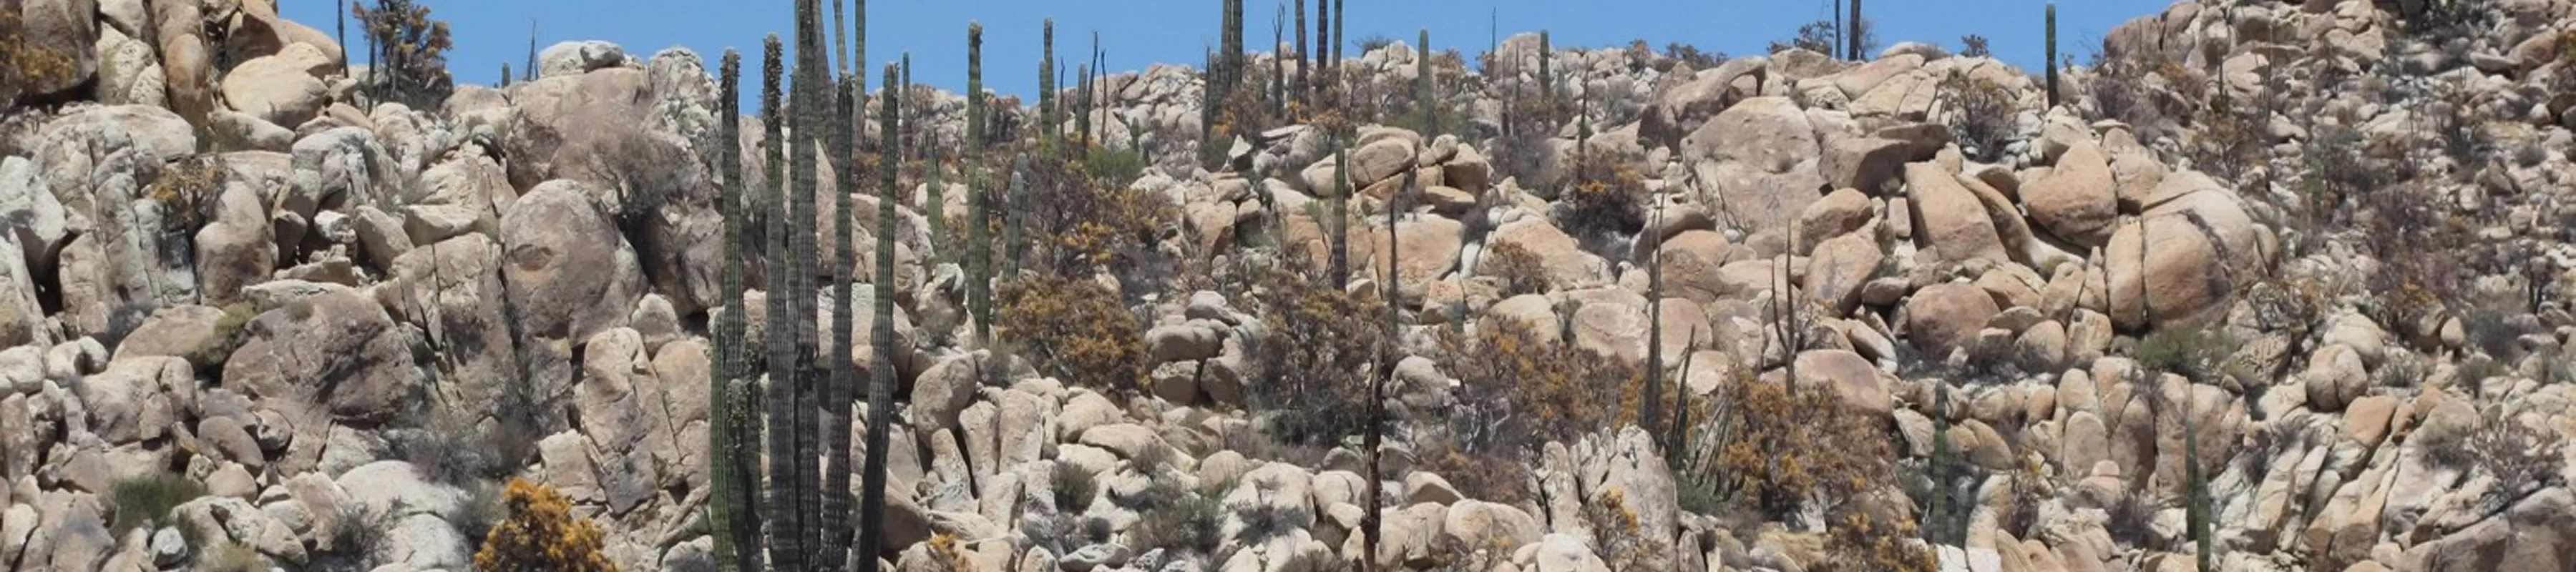 Rocky landscape in Mexico